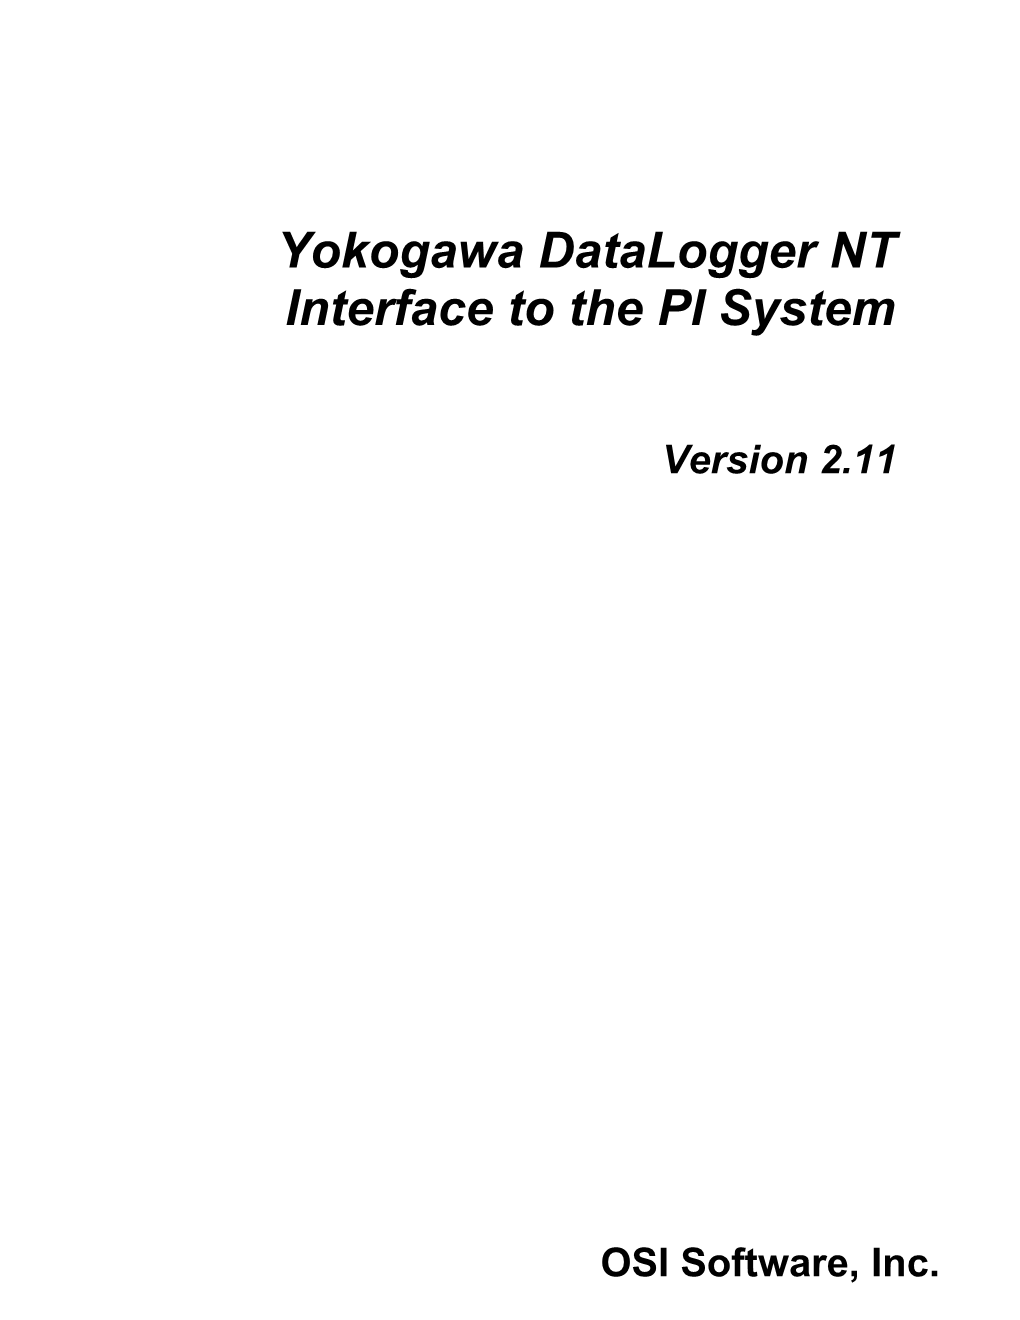 Yokogawa Datalogger NT Interface to the PI System